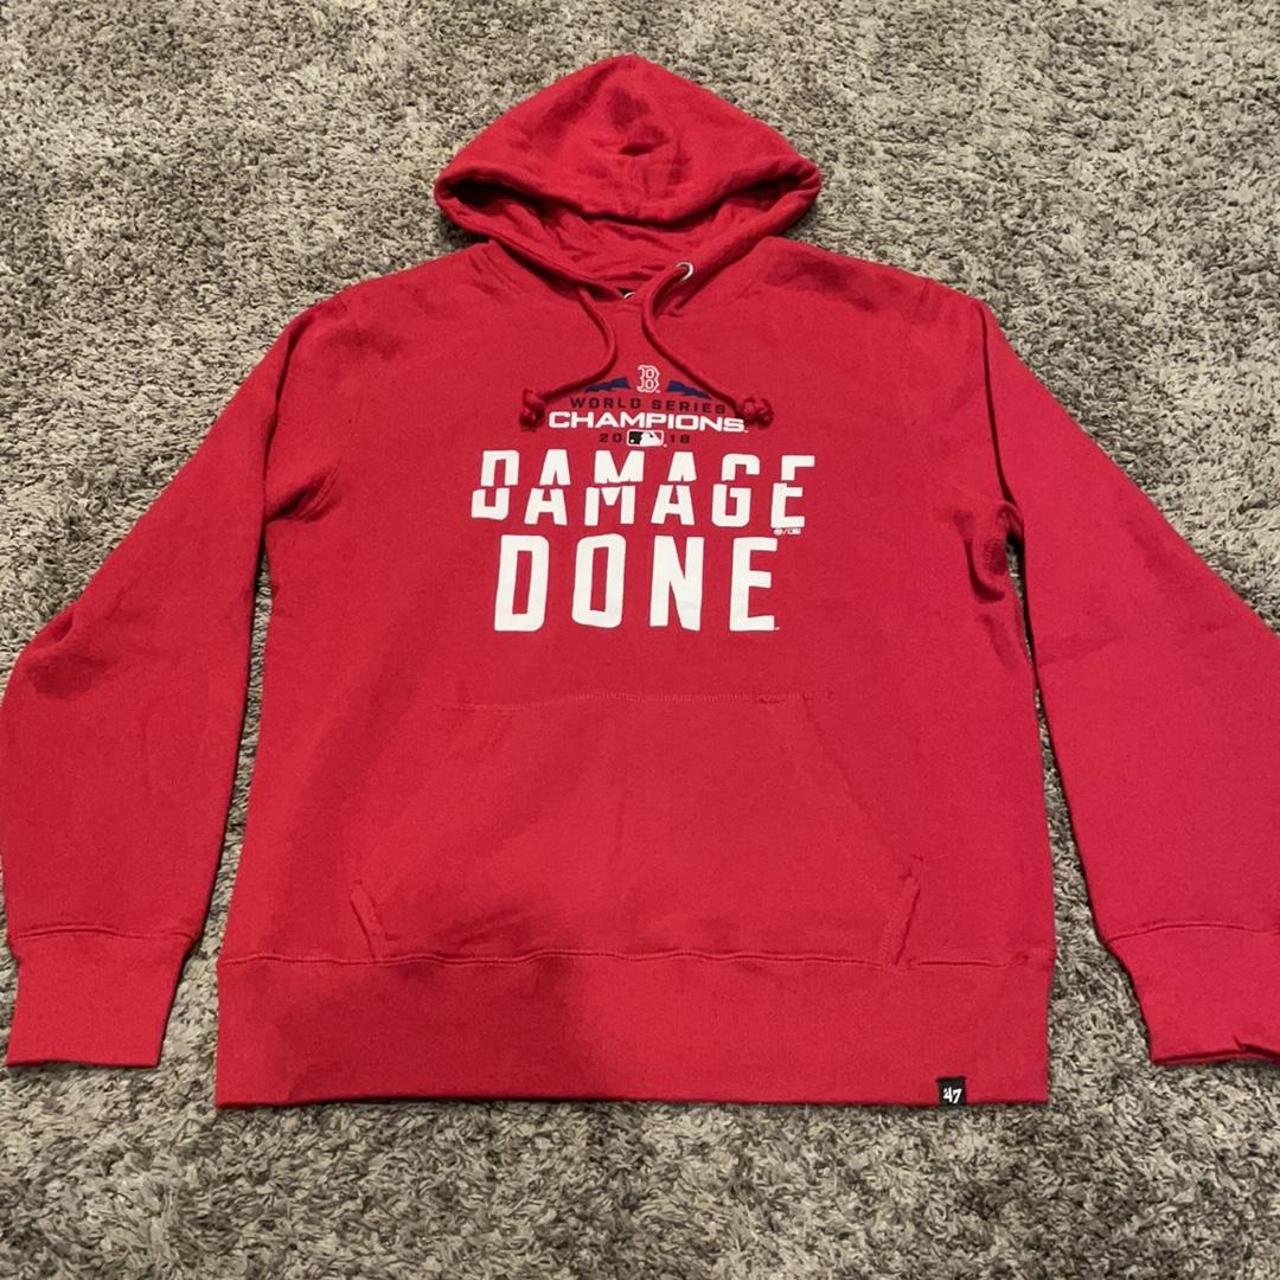 Damage Done Red Sox World Series 2018 Sweatshirt